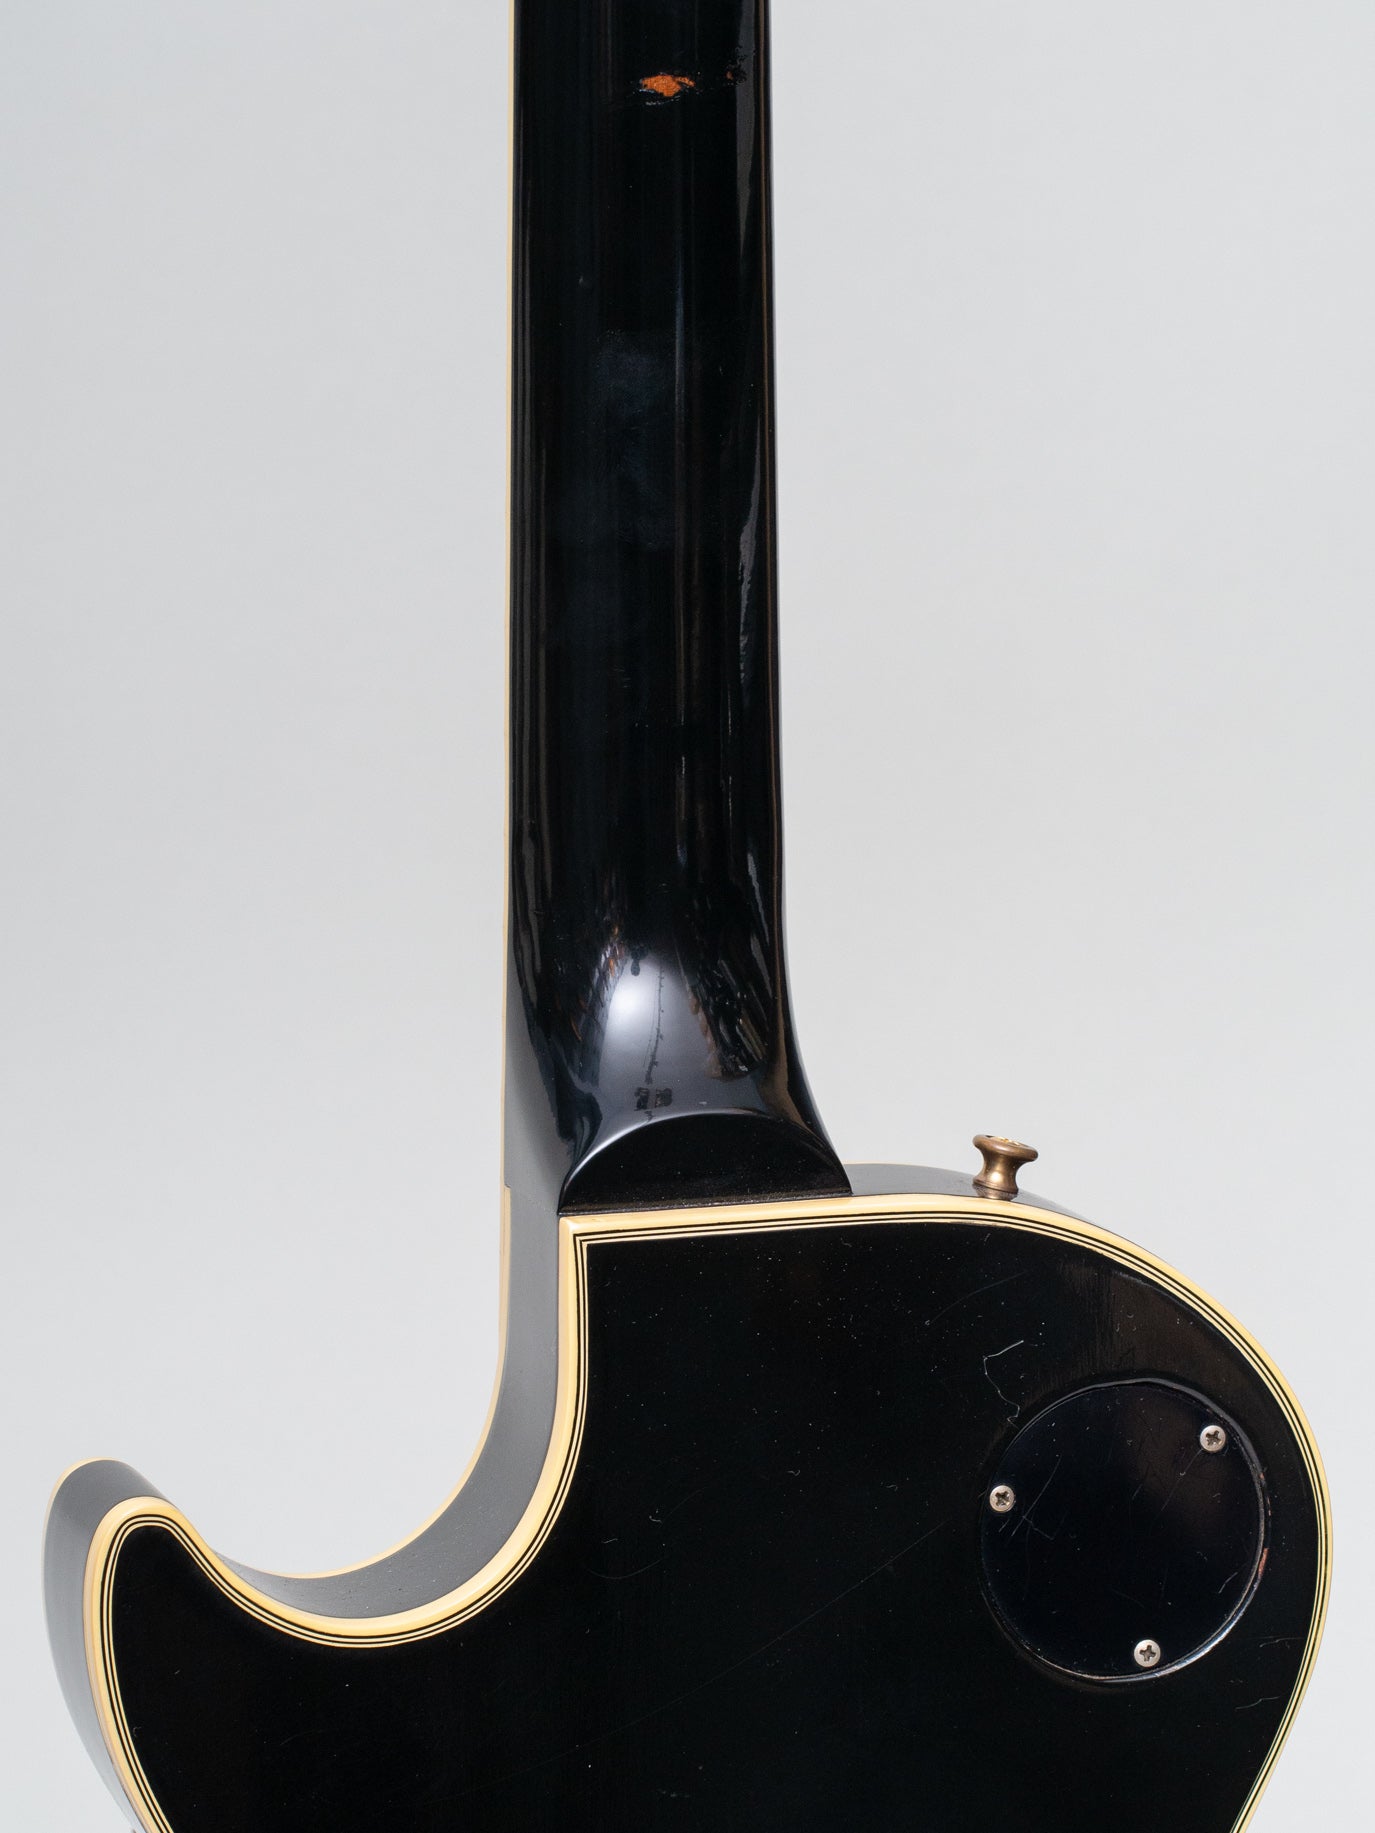 1992 Gibson Les Paul Custom Pre-Historic